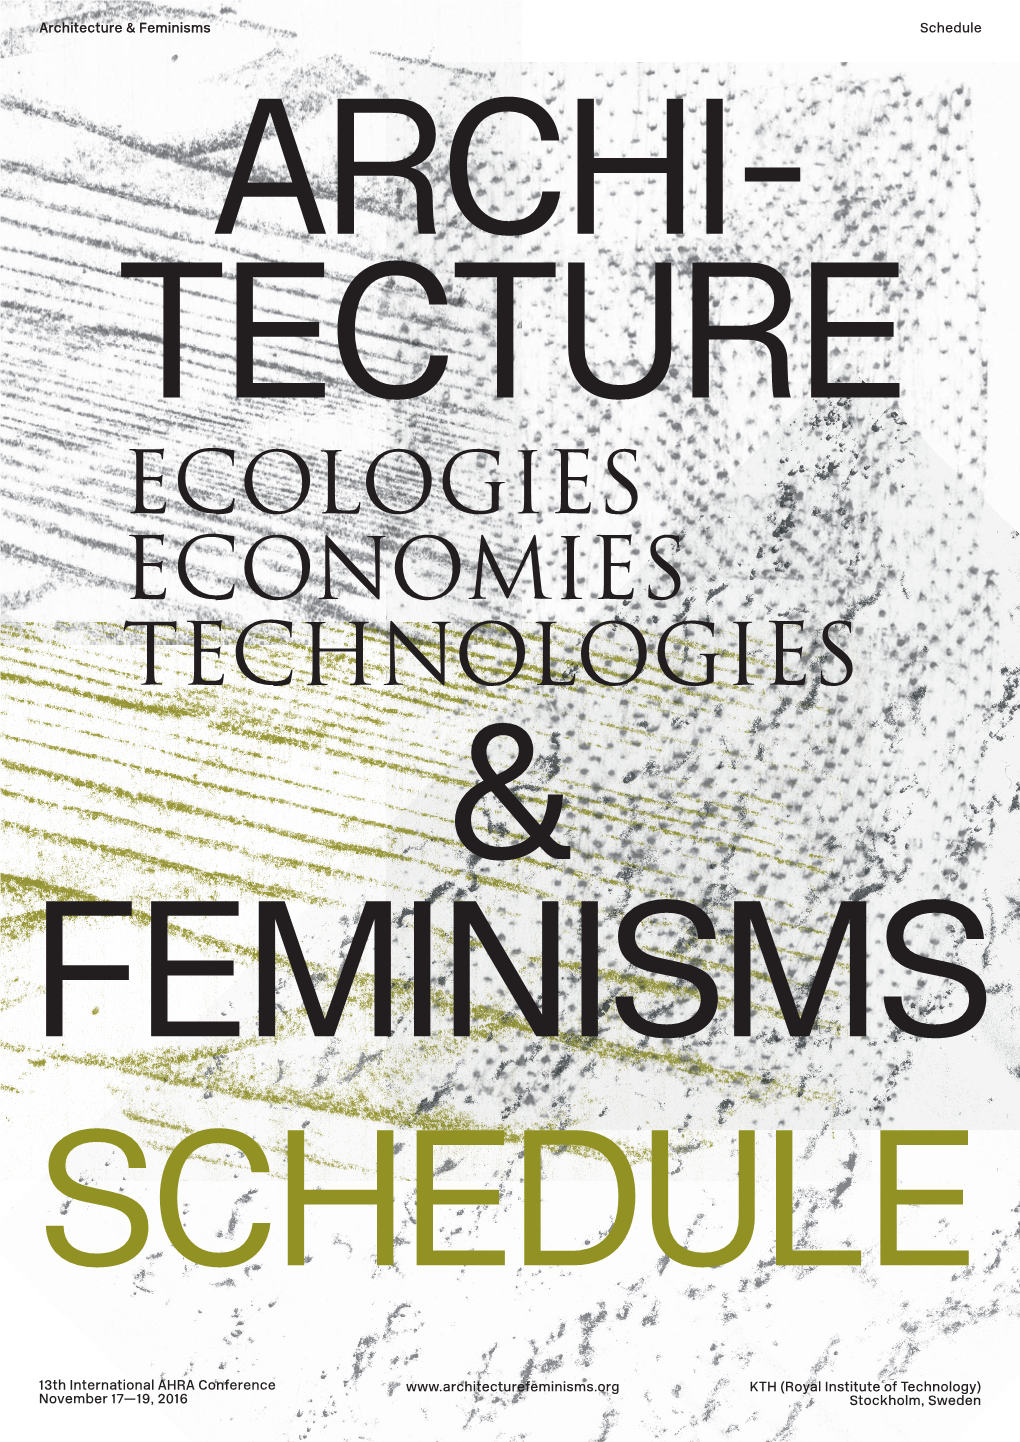 Ecologies Economies Technologies & Feminisms Schedule